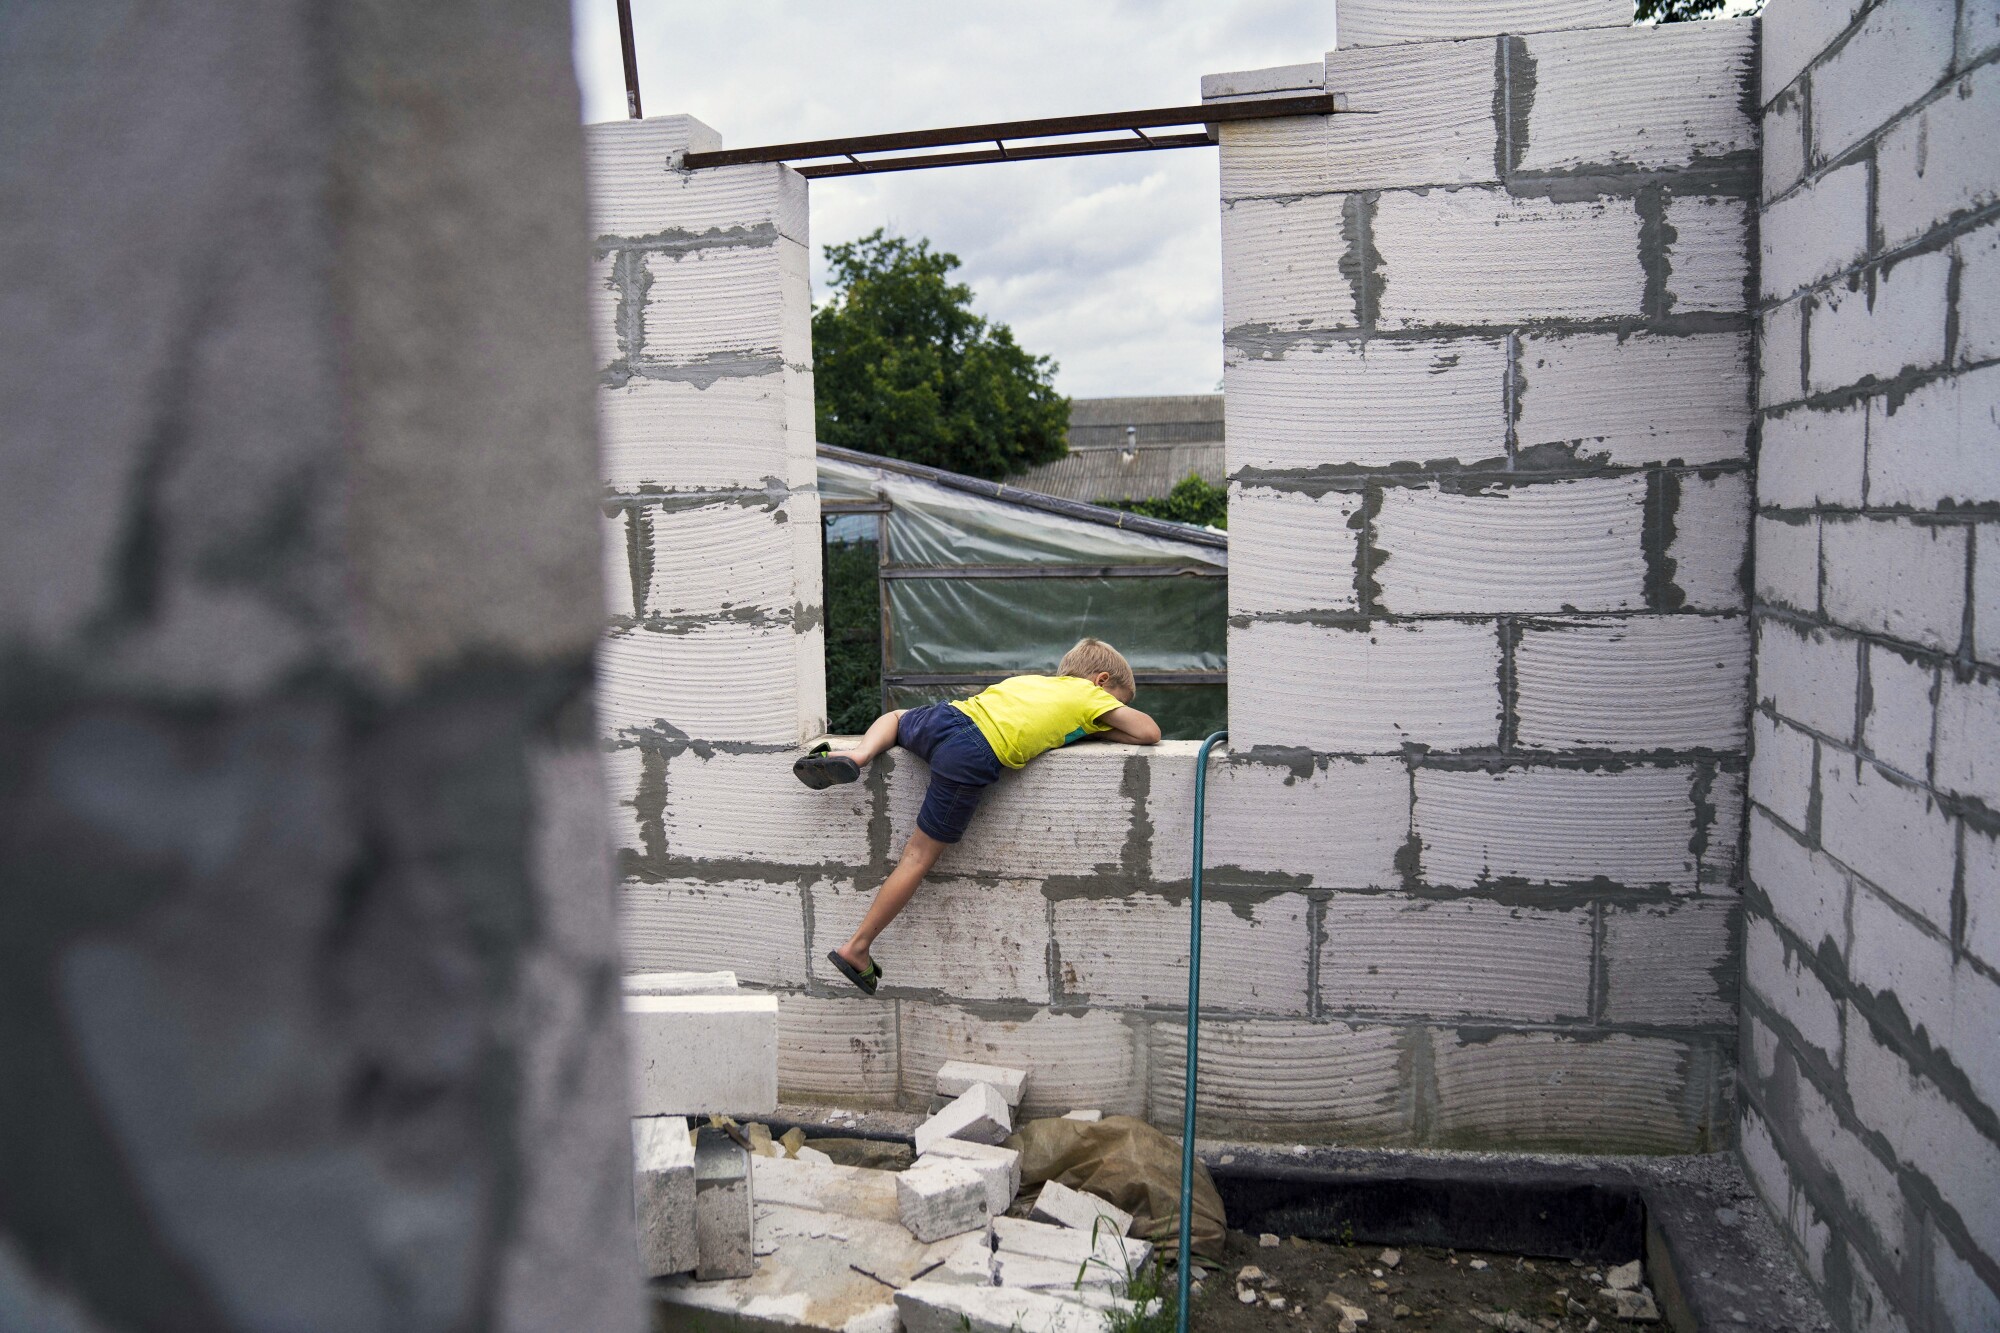 A boy climbs over a wall opening.